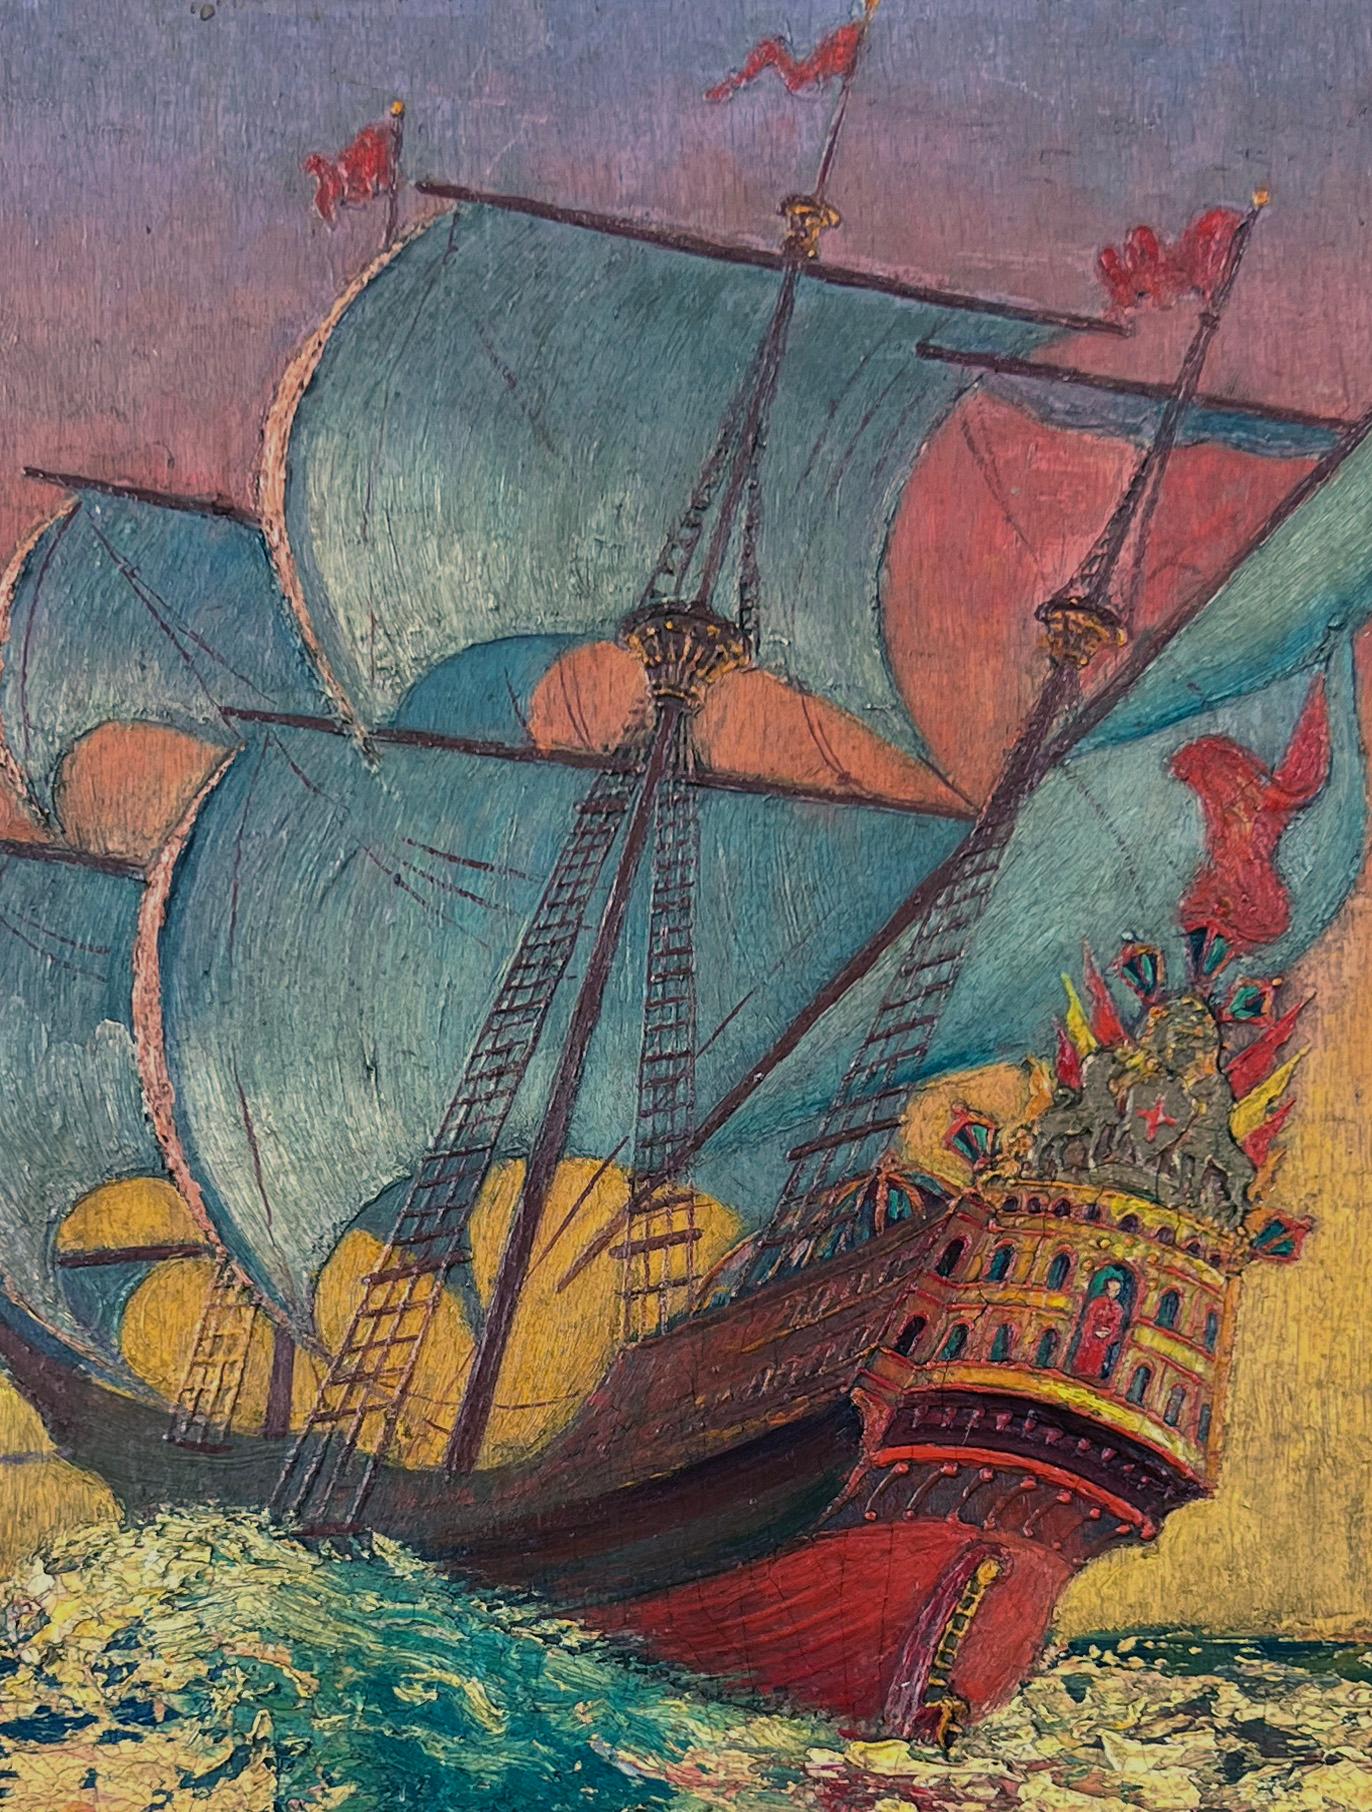 spanish galleon painting